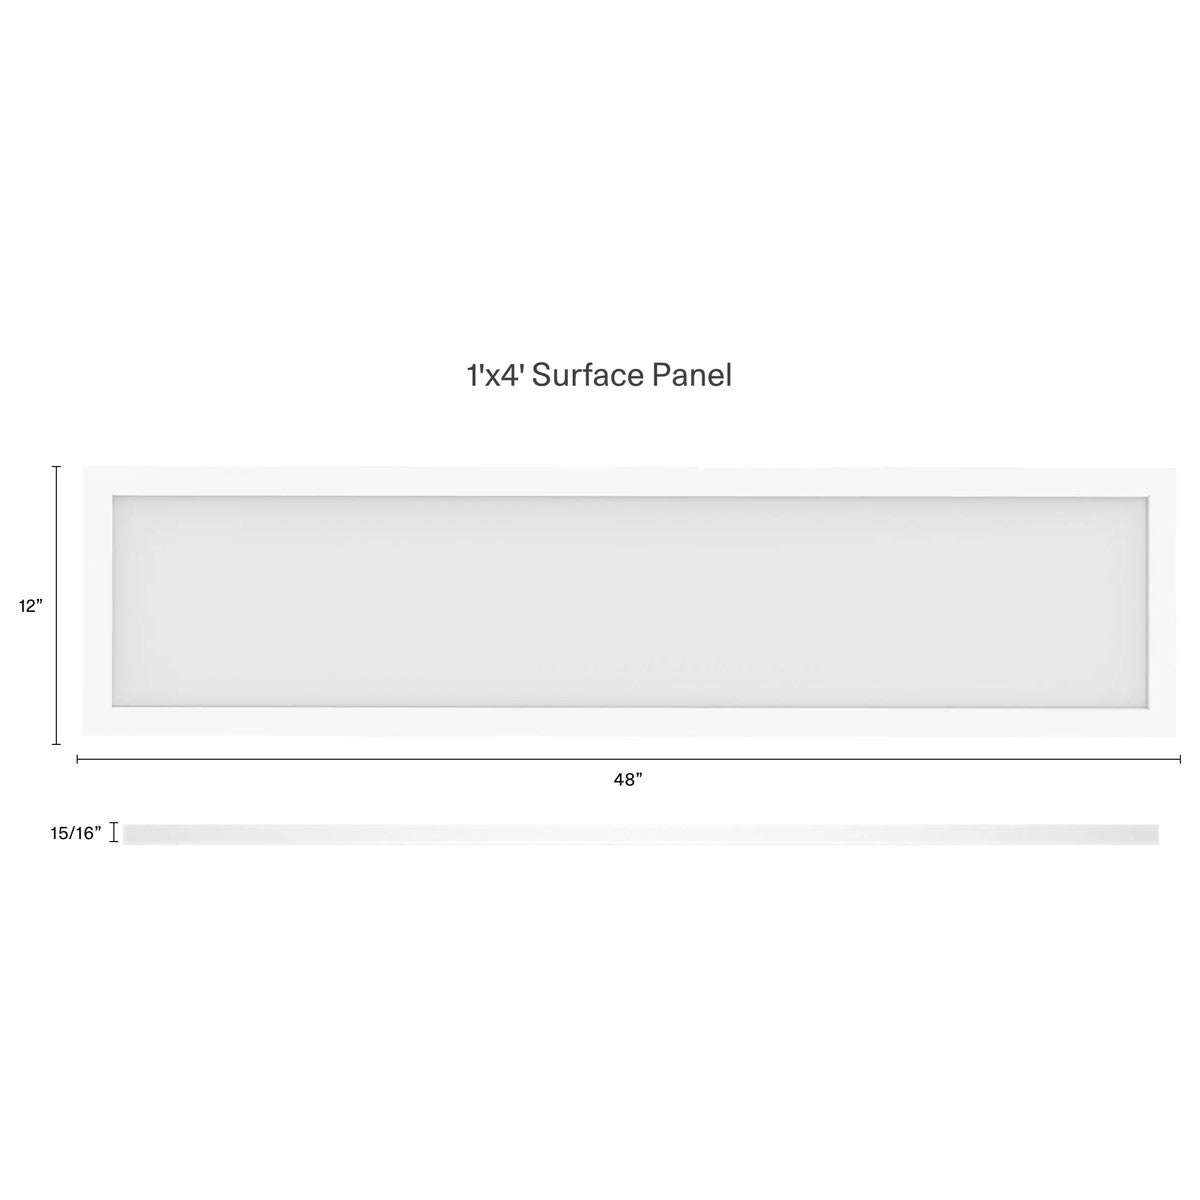 SMPFA LED Surface Mount Selectable CCT White Finish